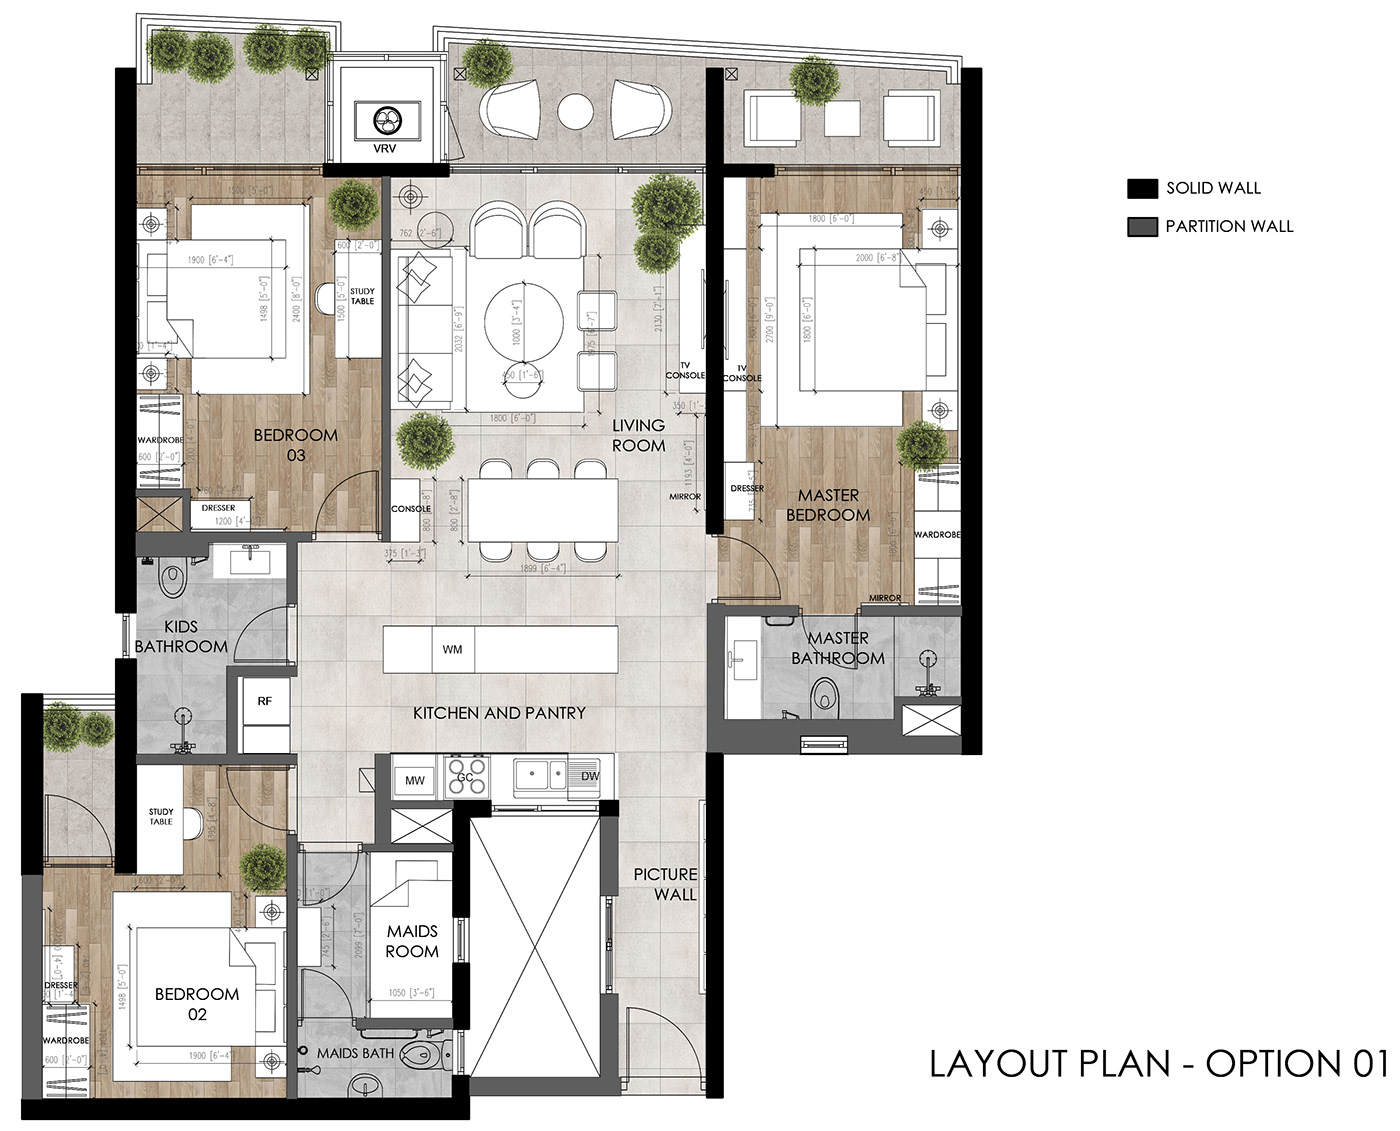 Japandi moodboards interiordesign design concept apartmentinterior conceptdevelopment